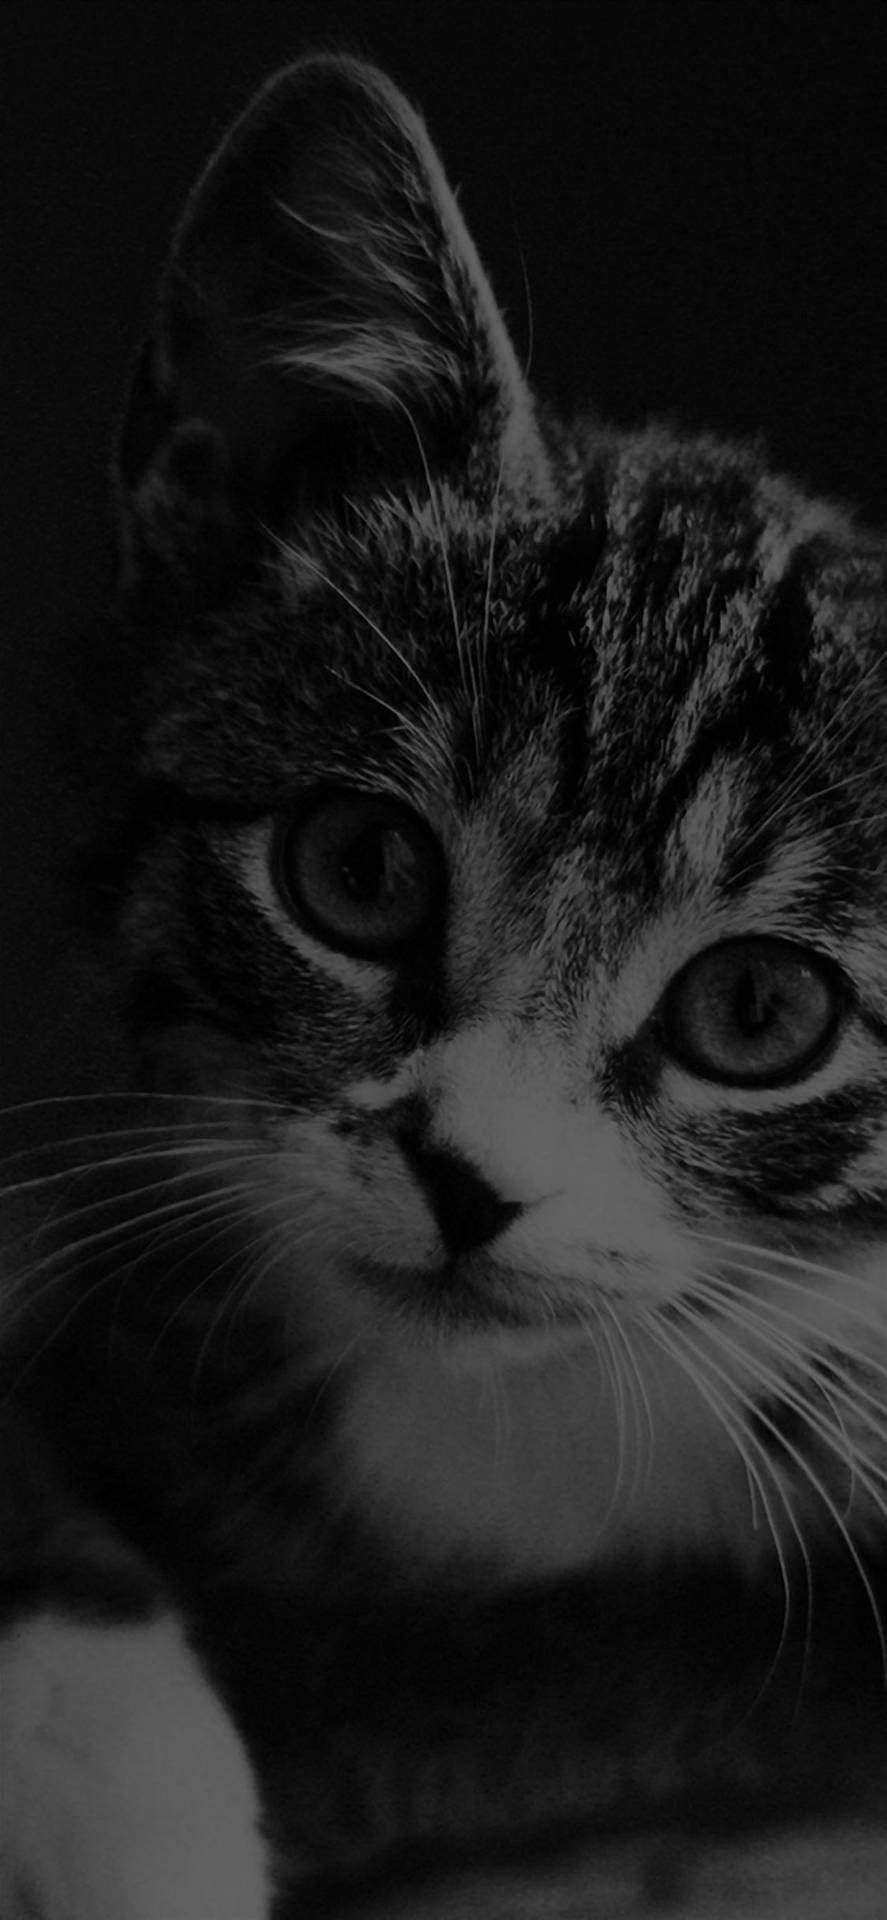 Black And White Kitten Black Apple Iphone Background